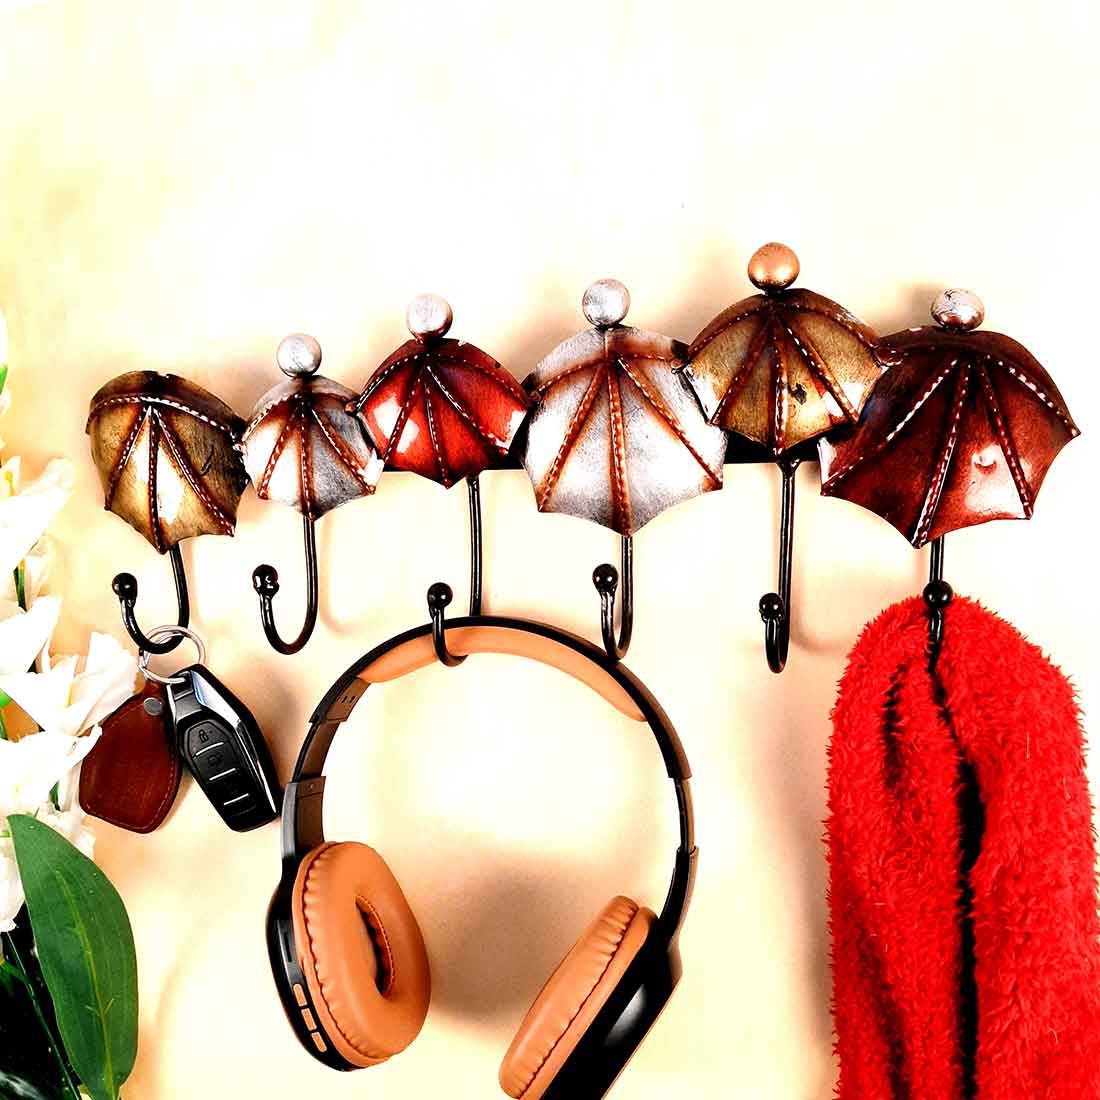 Key Hook Wall Hanging | Key Holder Stand - Umbrella Design | Key Hanger Organiser - For Home, Entrance, Office Decor & Gifts -18 Inch ( 6 Hooks)